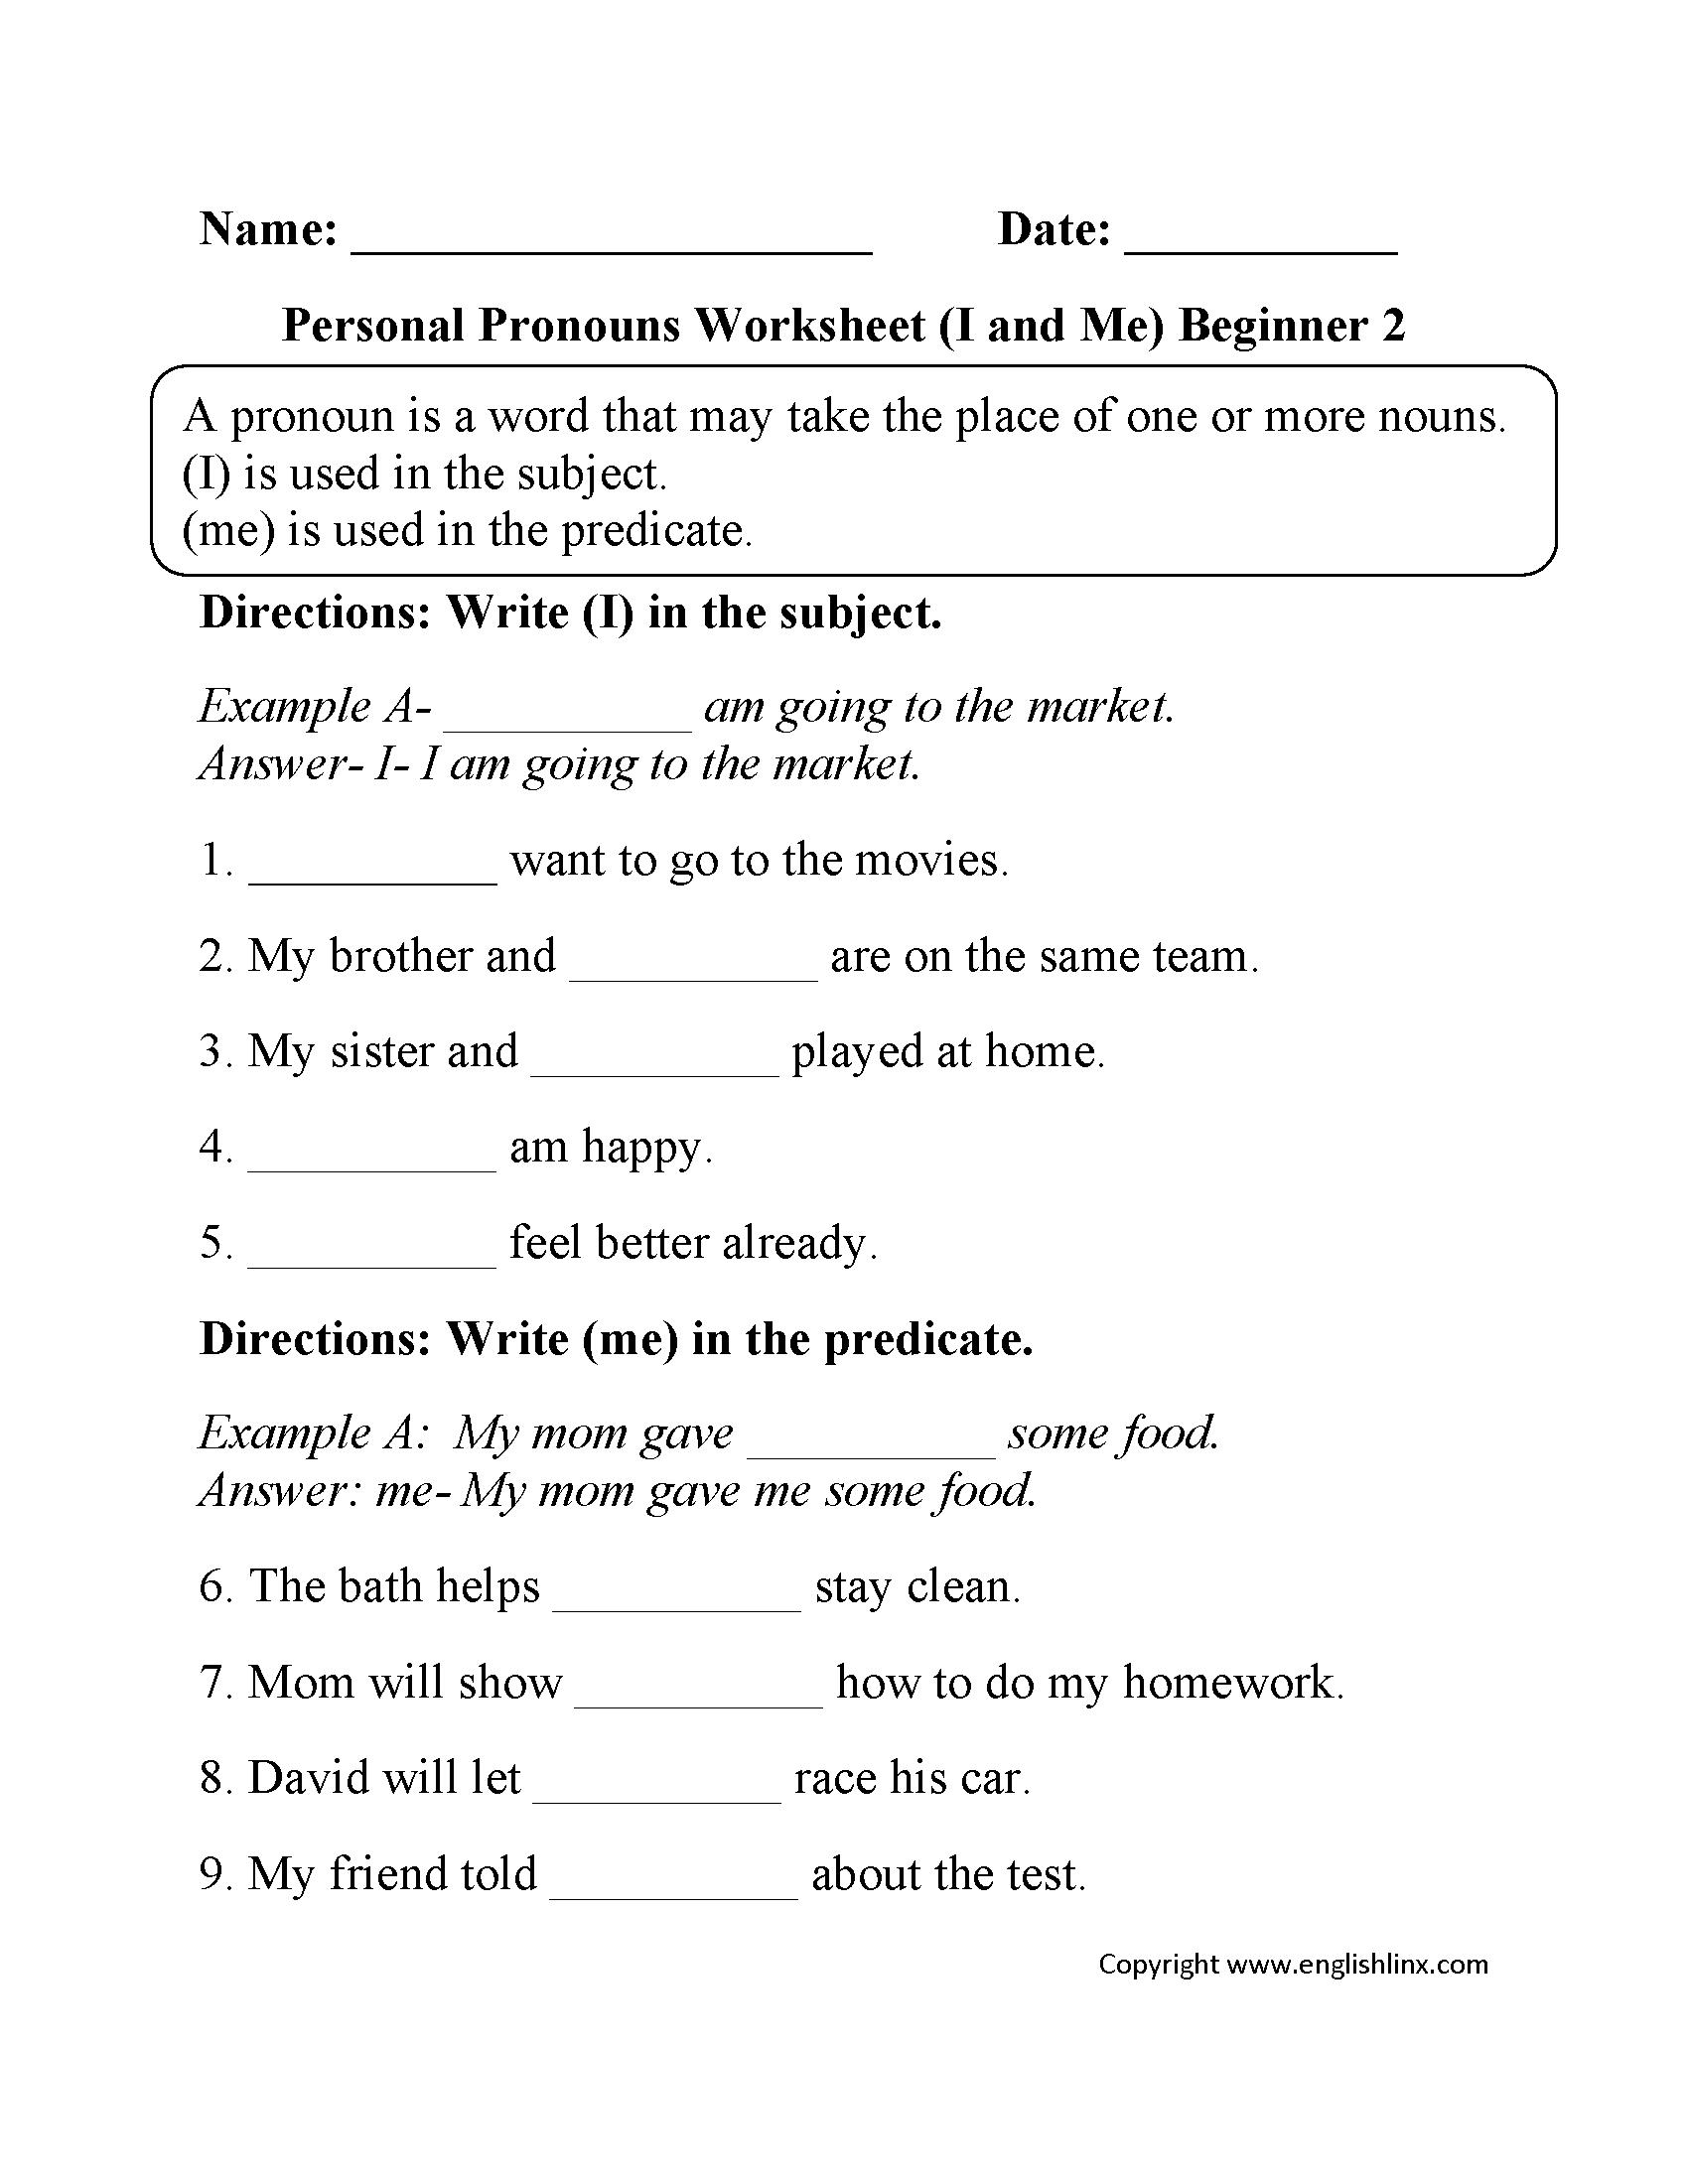 Pronouns Worksheets  Personal Pronouns Worksheets And Pronoun Worksheets 3Rd Grade